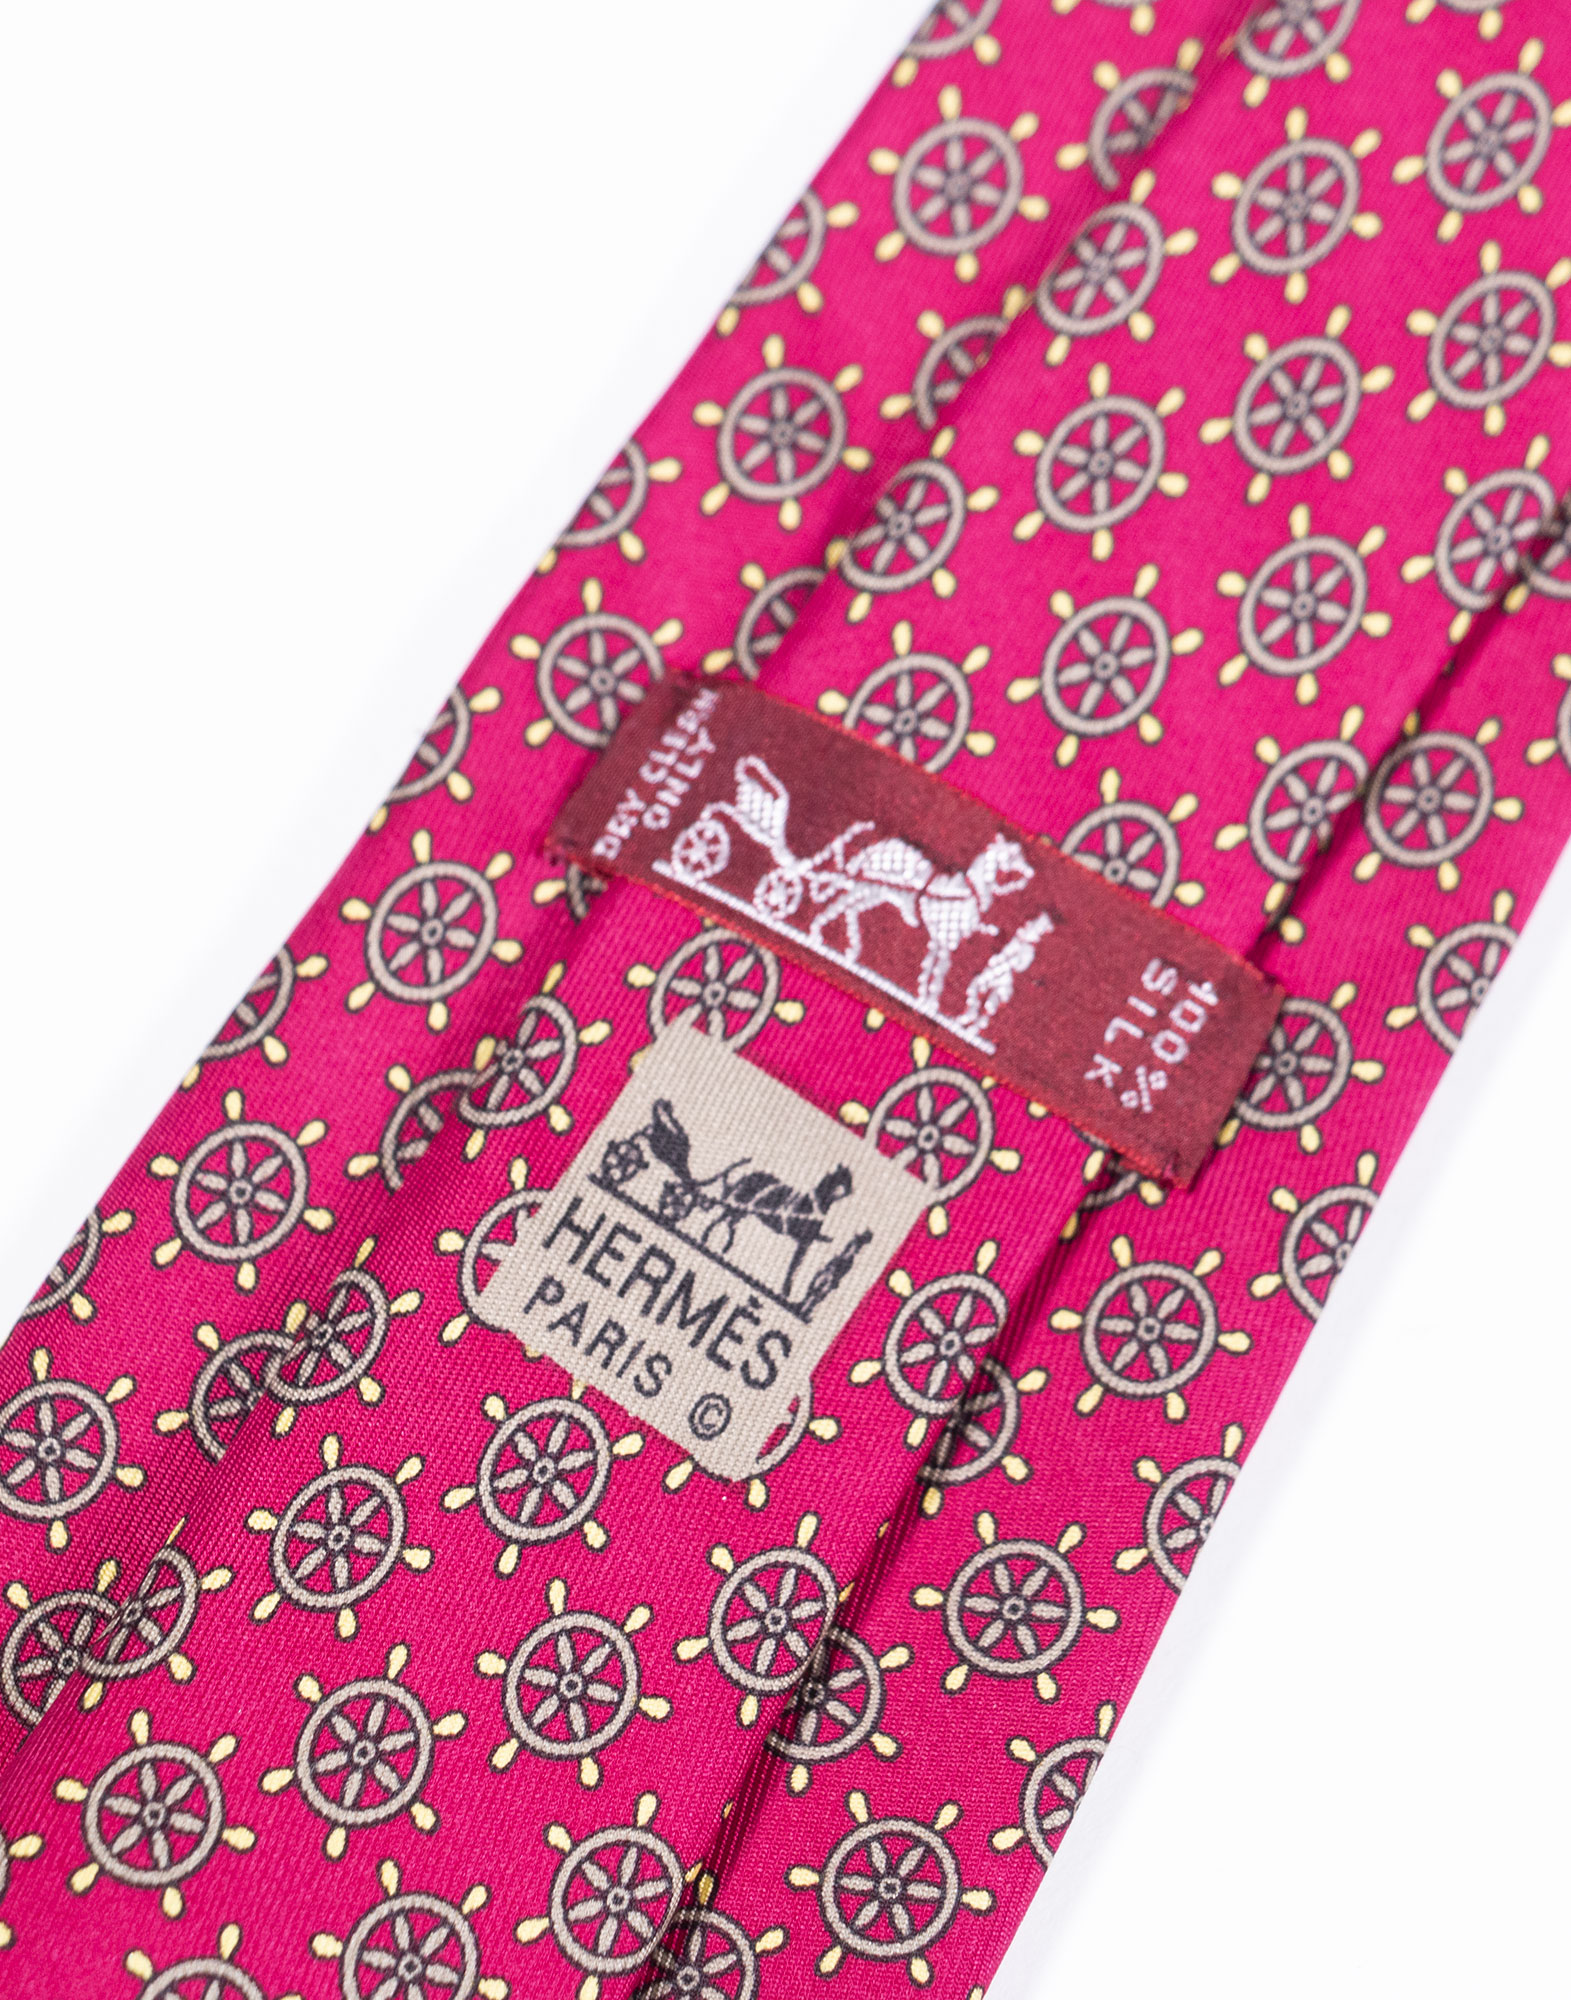 Hermes - Cravatta vintage in seta fucsia